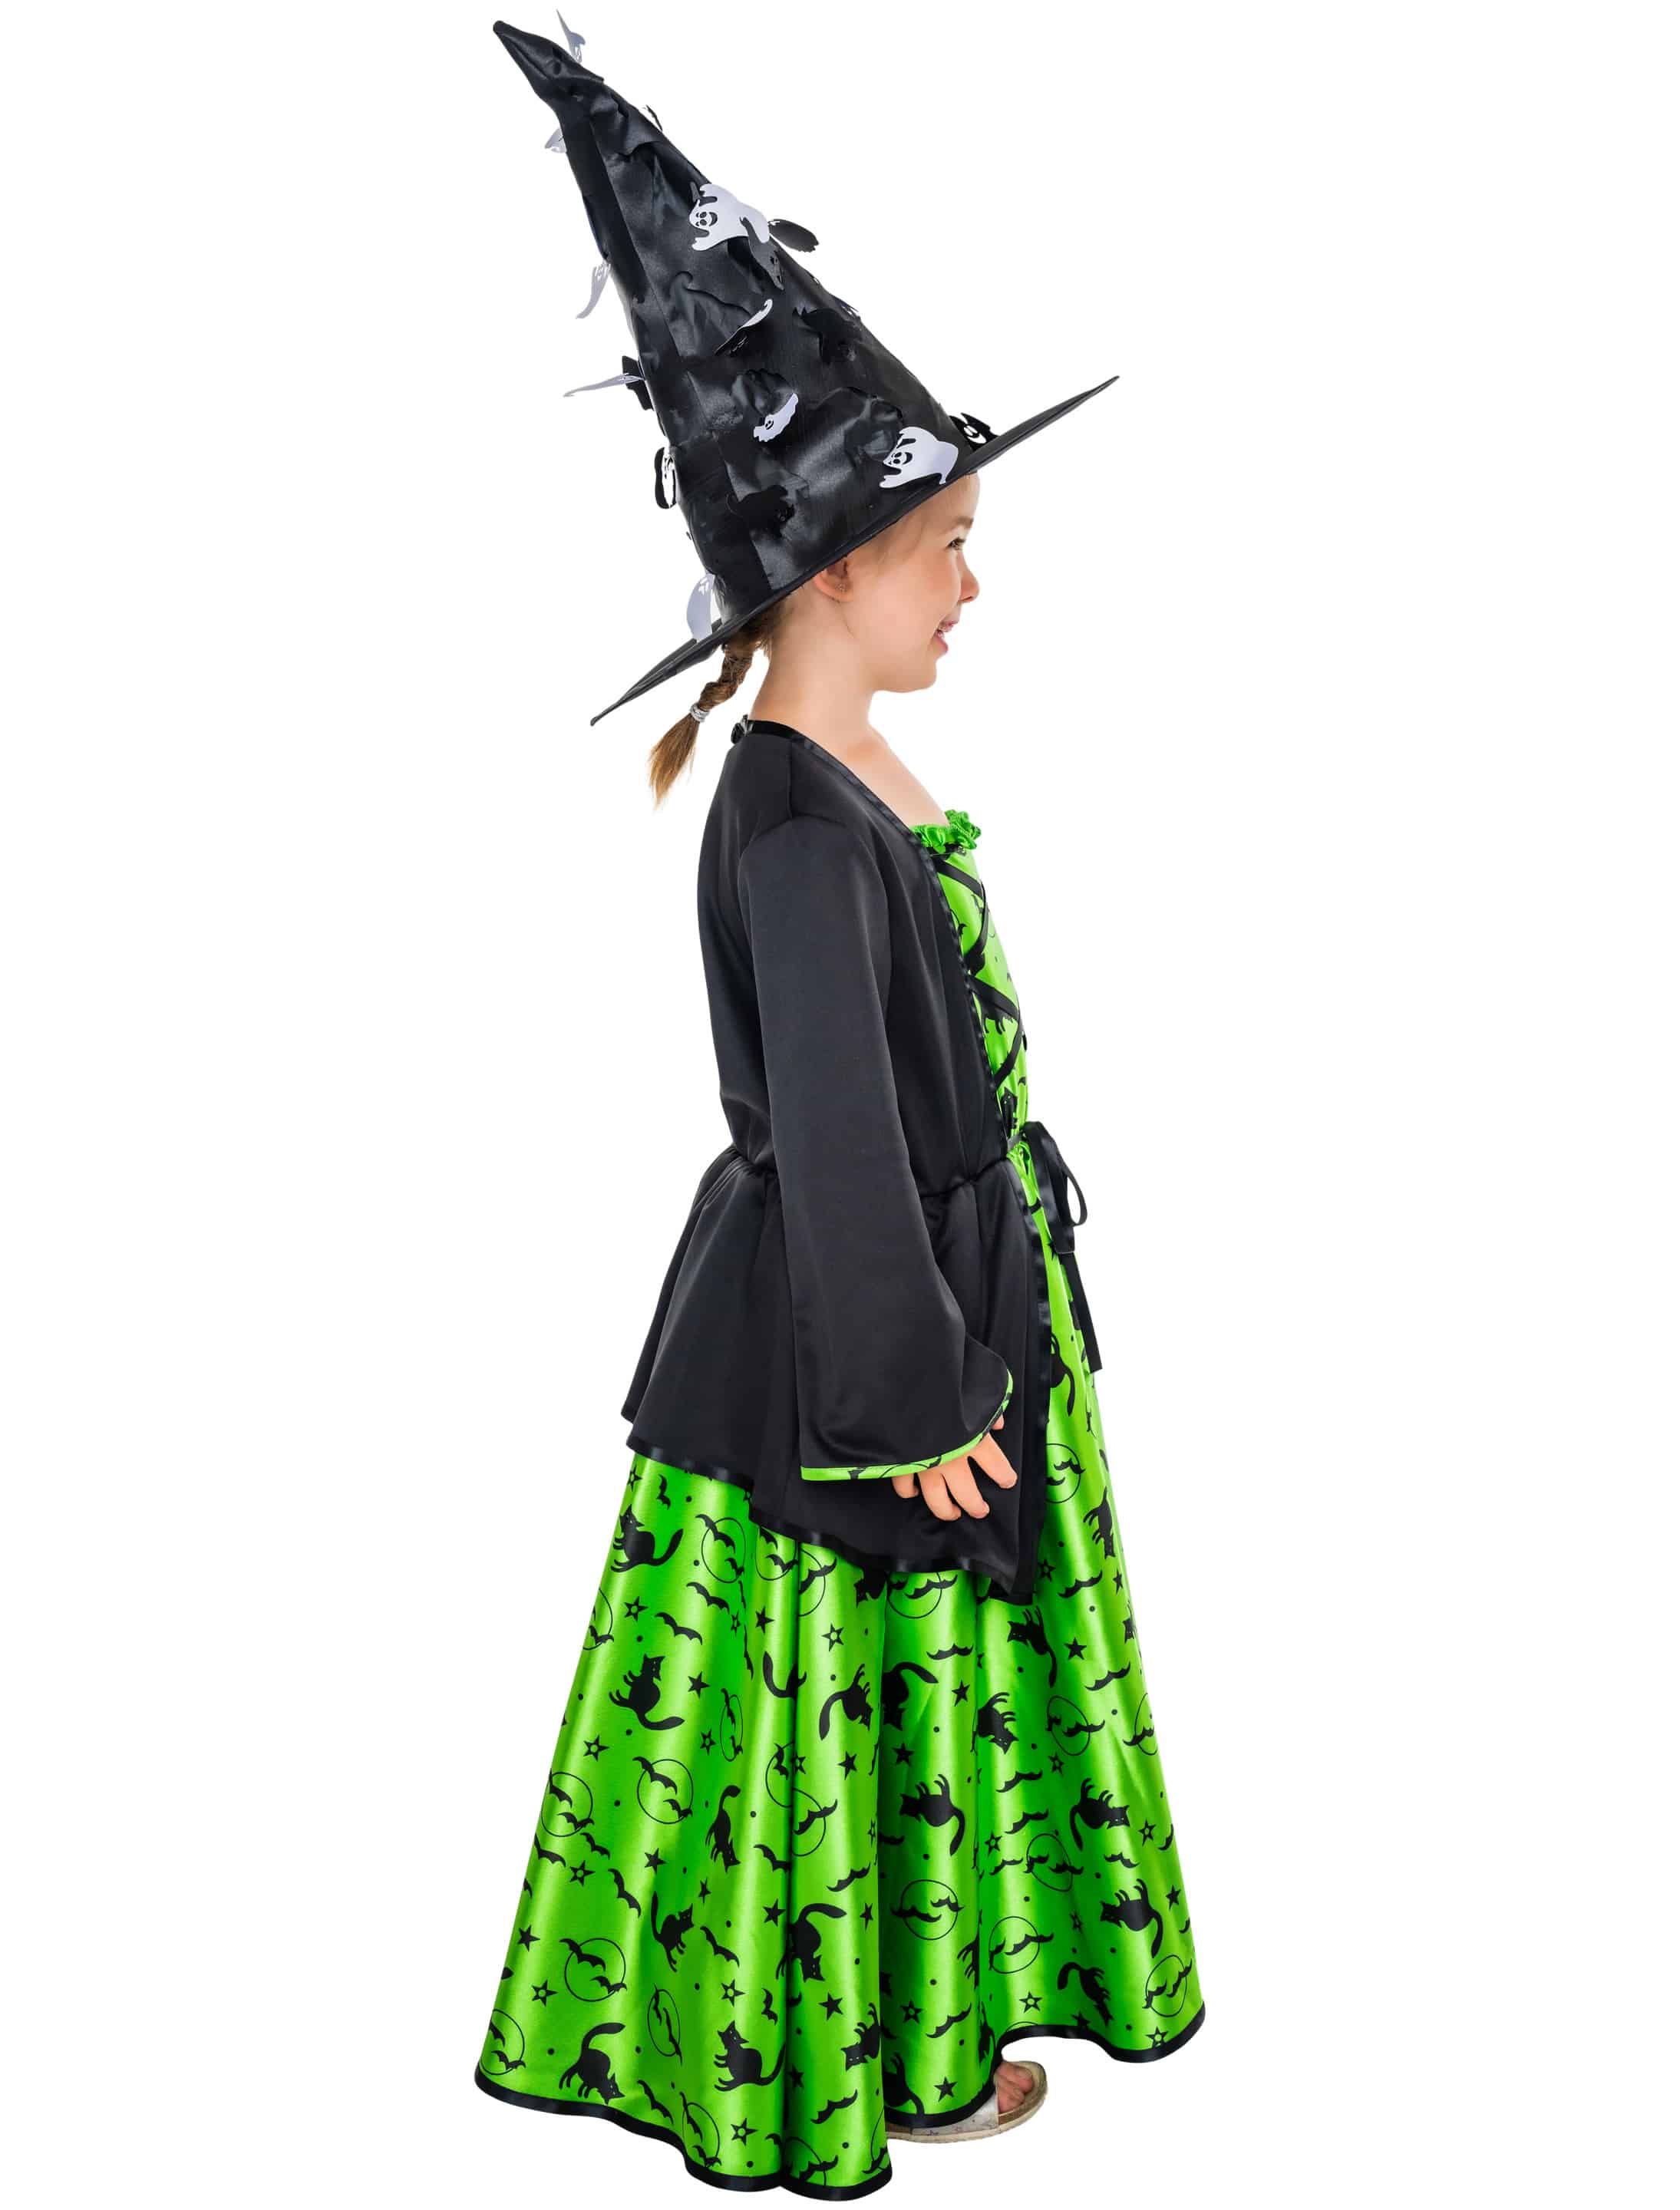 Kleid Hexe Kinder schwarz/grün 134